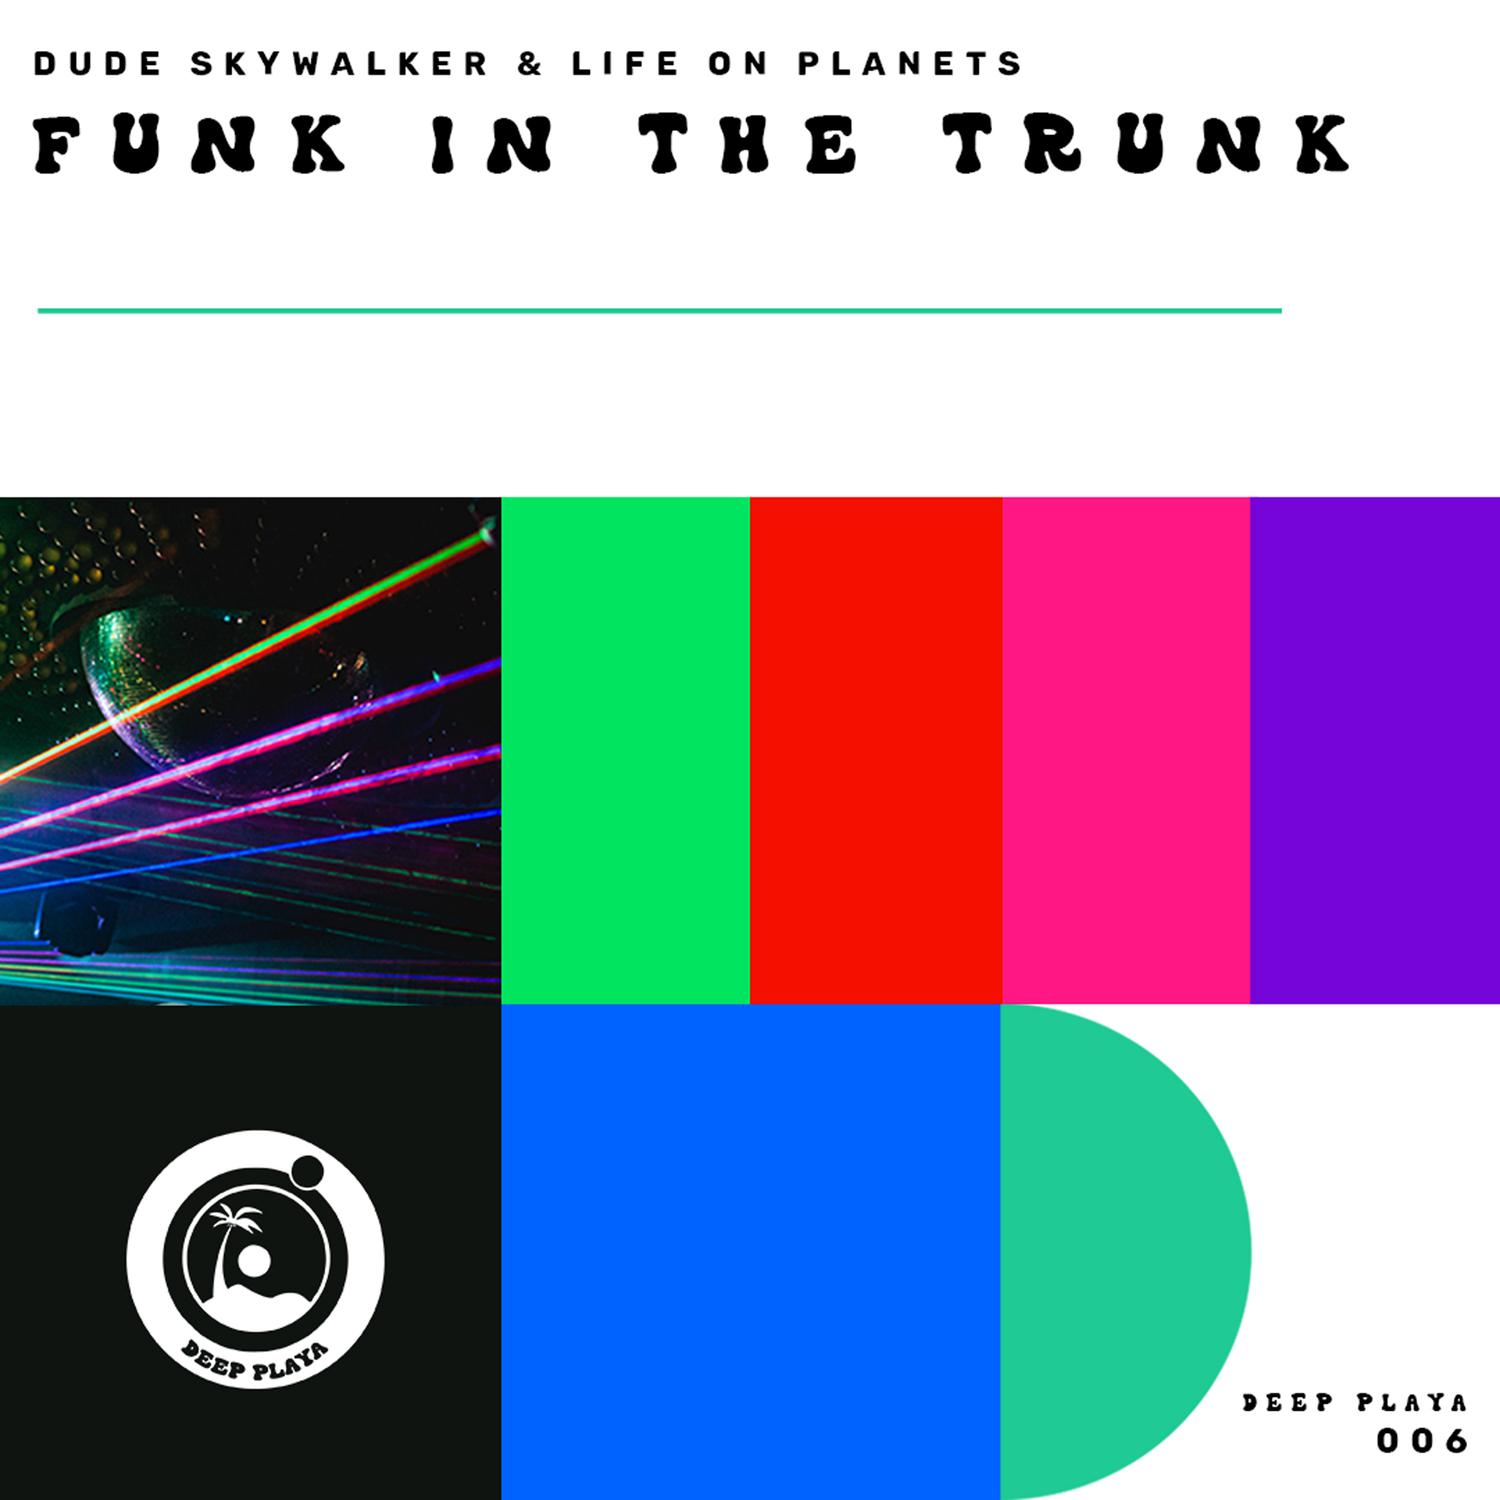 Dude Skywalker - Funk in the Trunk (Funk'd up Mix)